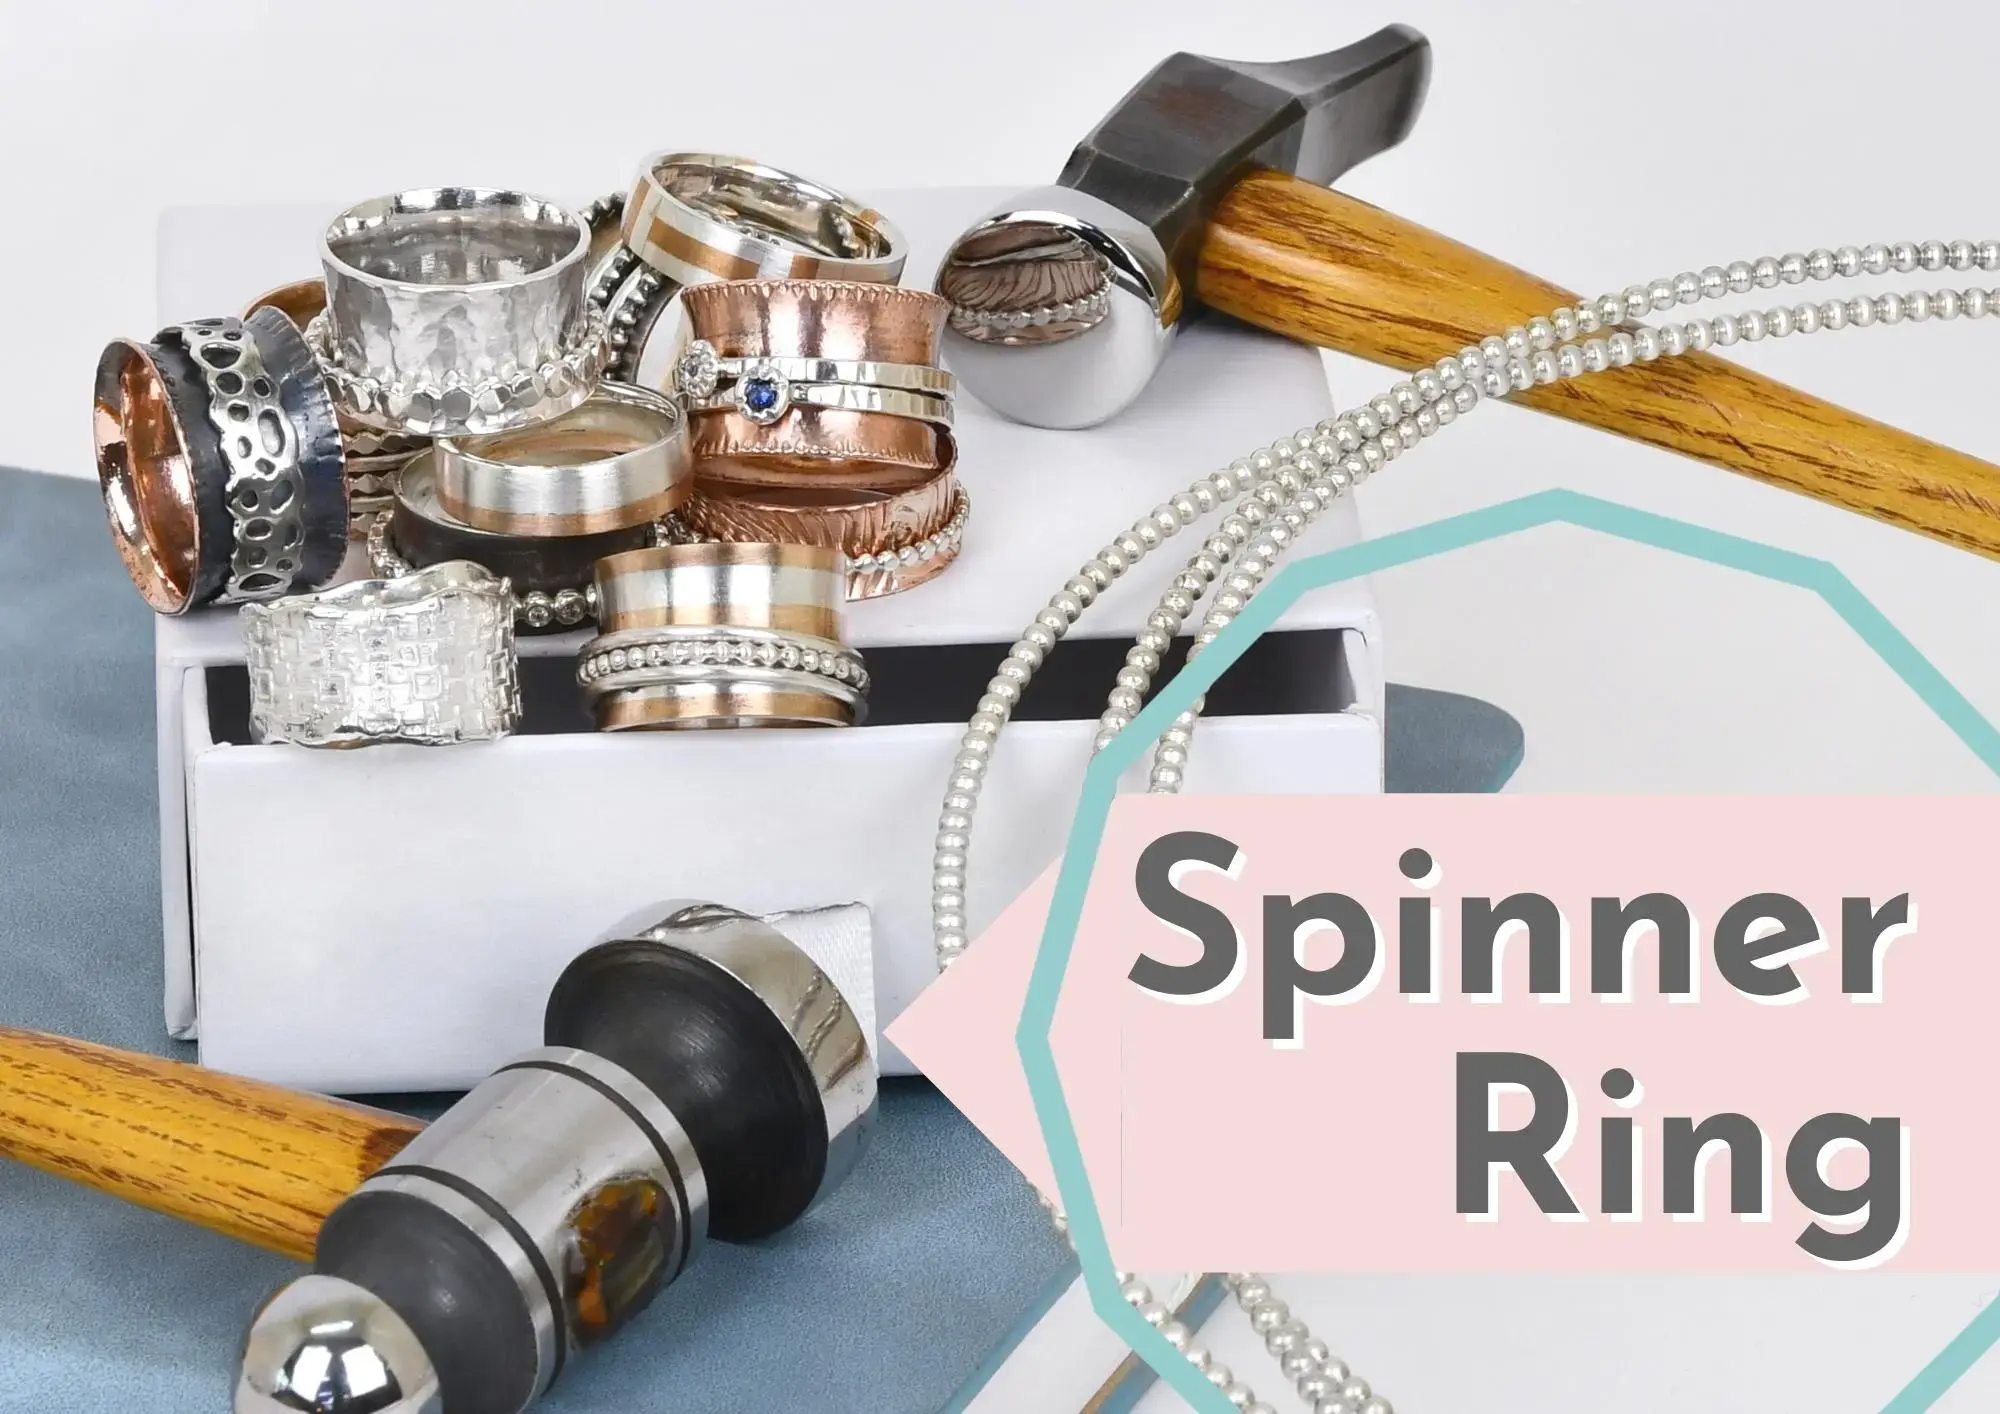 Spinner ring class